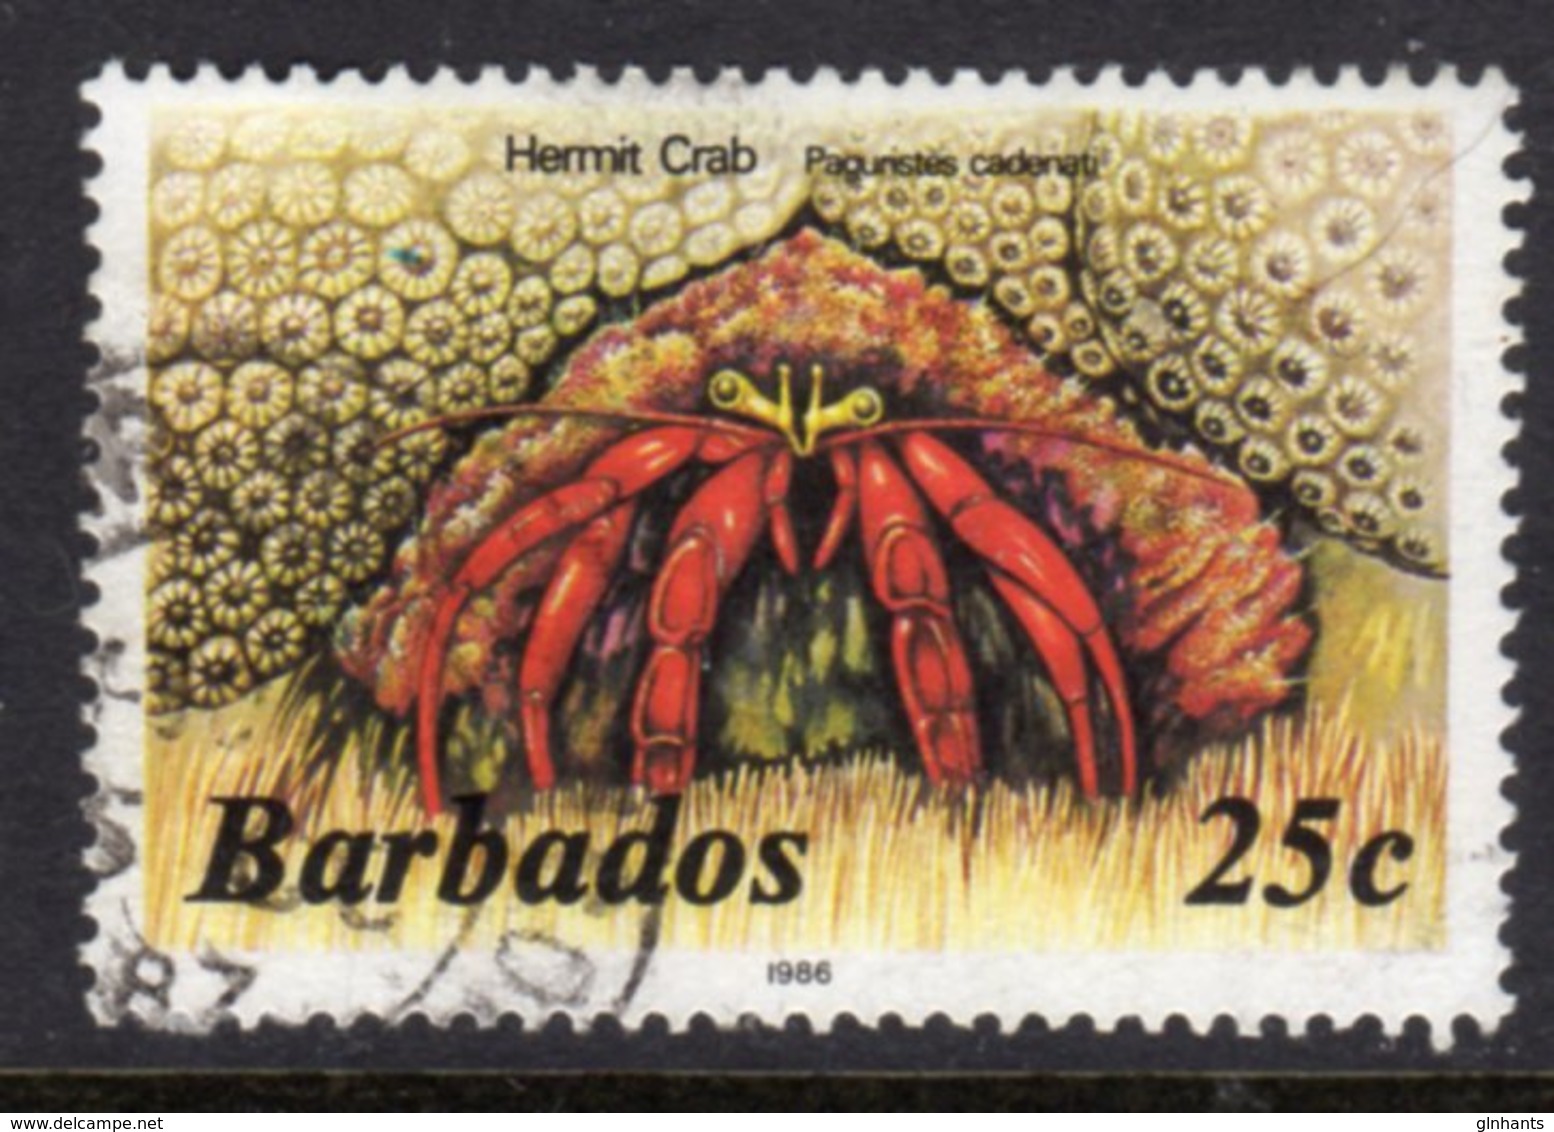 BARBADOS - 1986 25c MARINE LIFE STAMP WITH IMPRINT DATE WMK W16 SIDEWAYS FINE USED SG 799B - Barbados (1966-...)